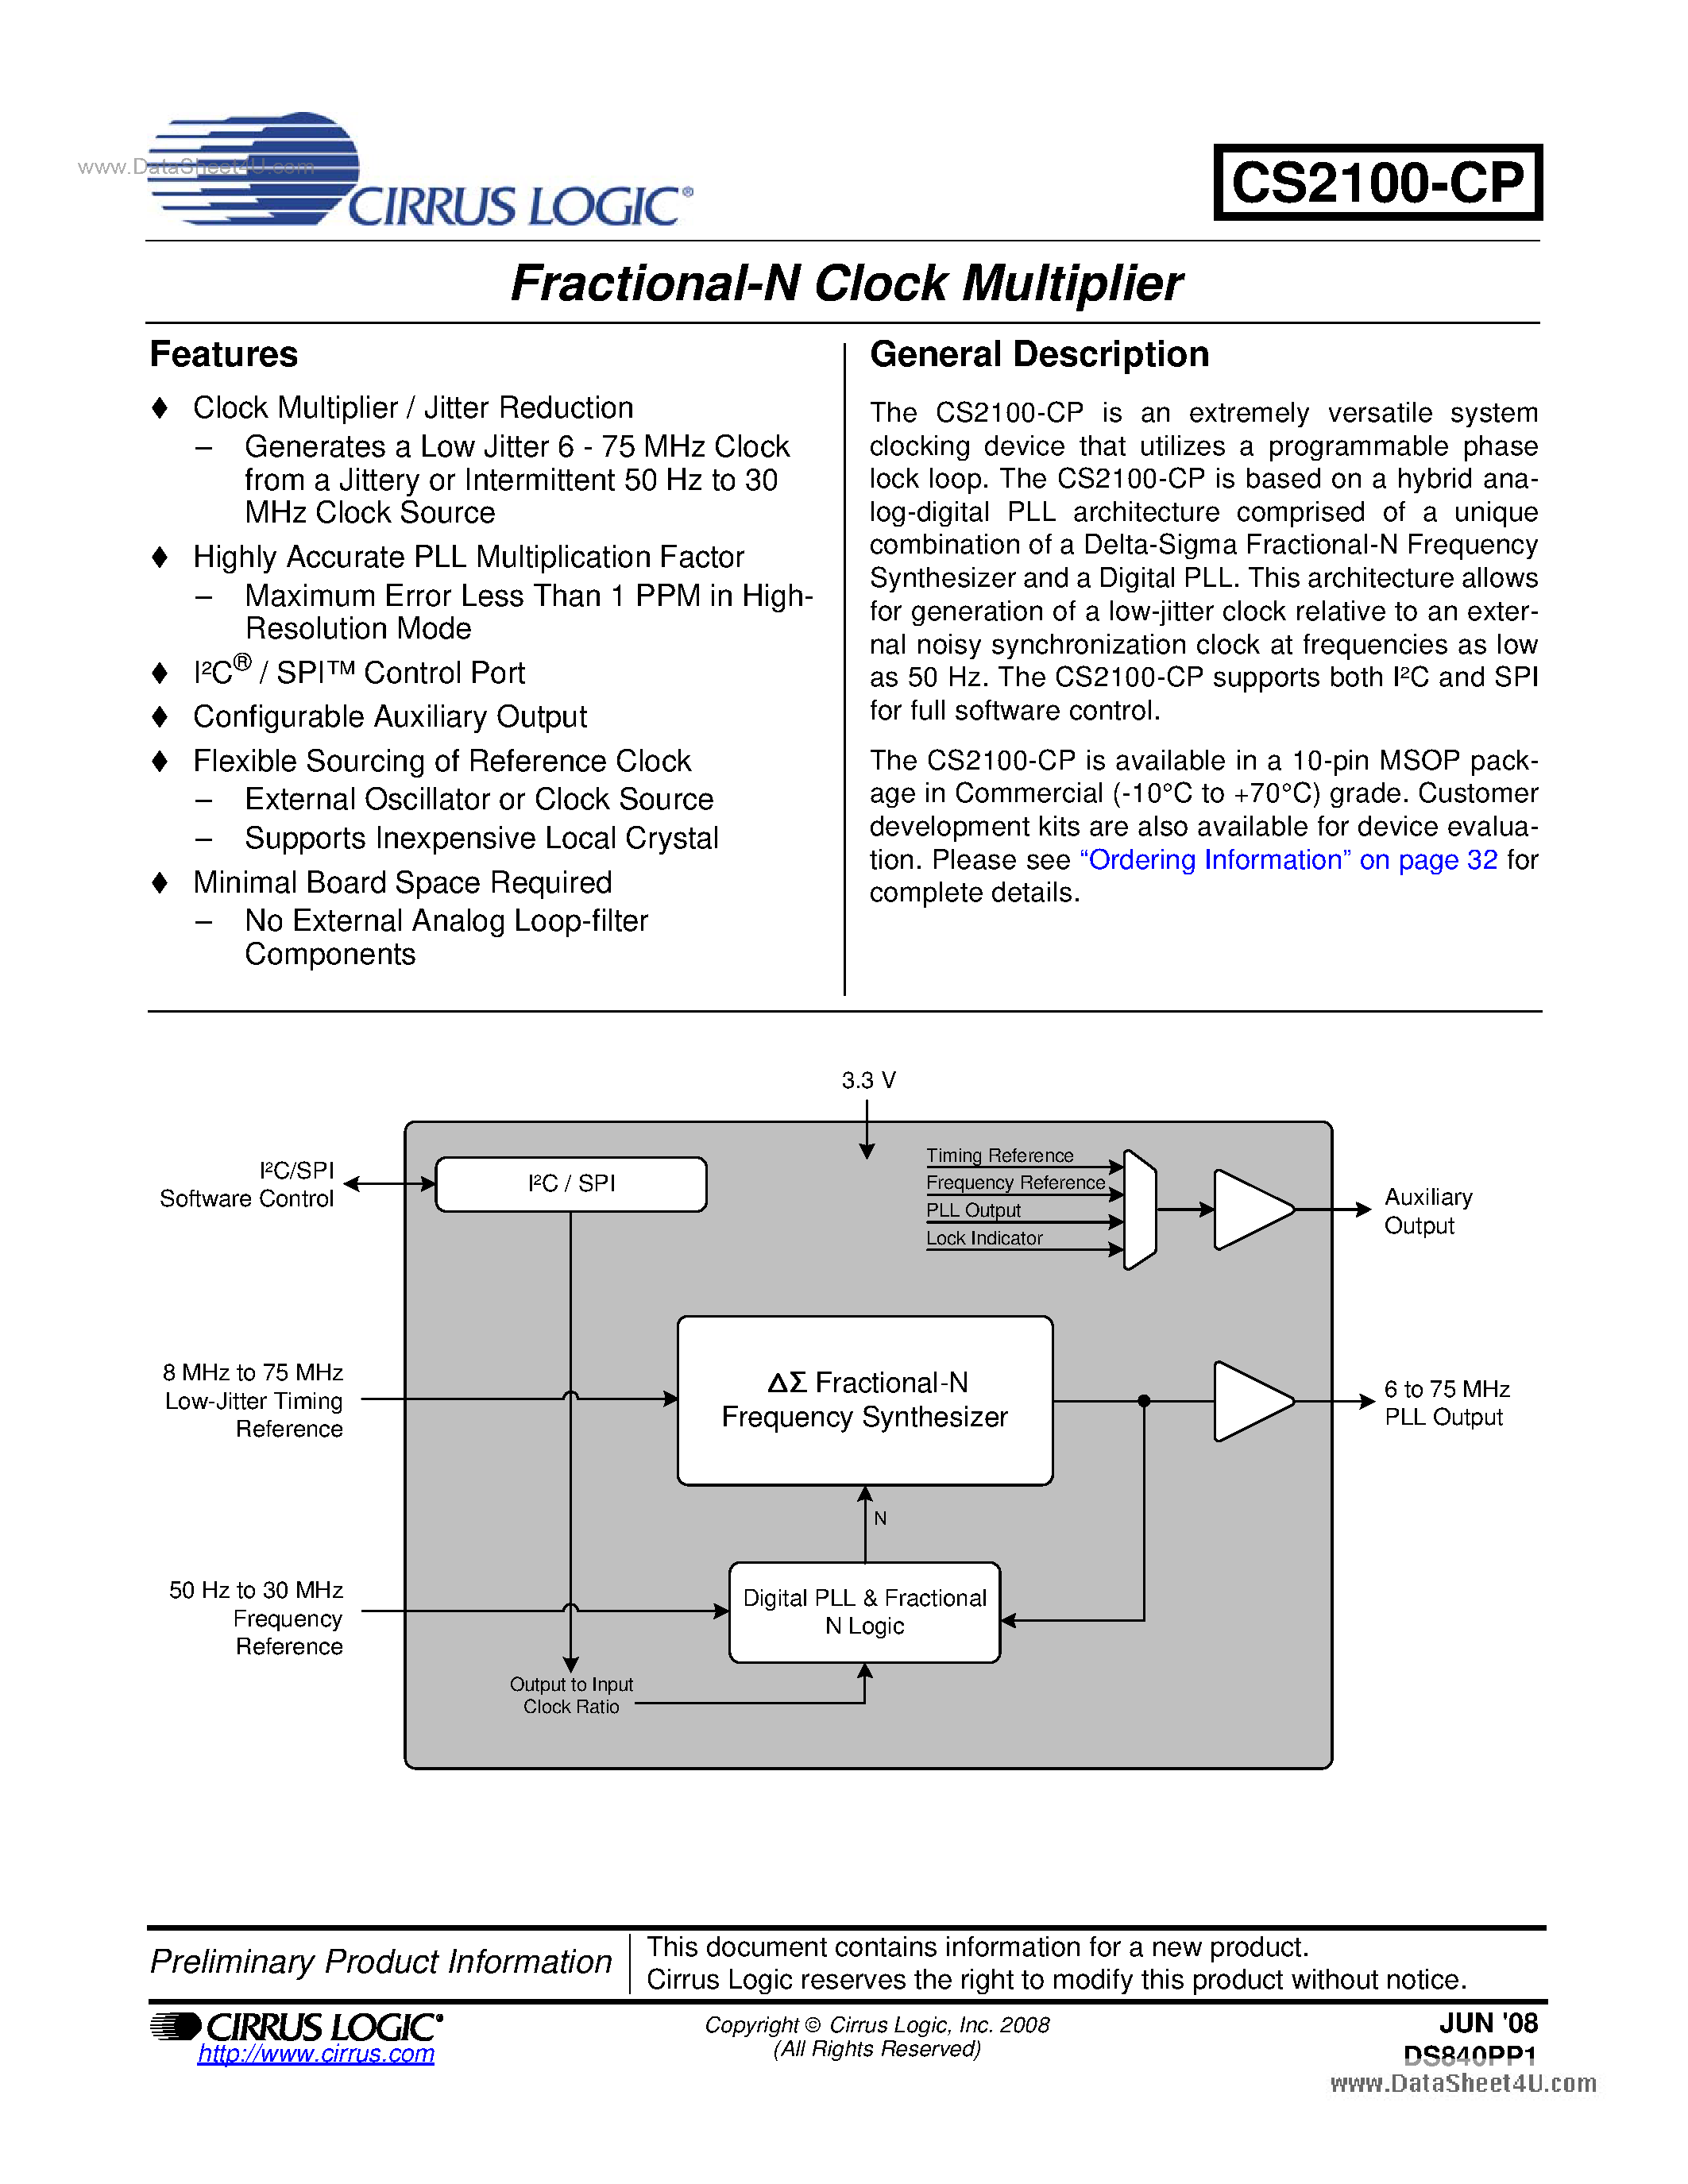 Datasheet CS2100-CP - Fractional-N Clock Multiplier page 1